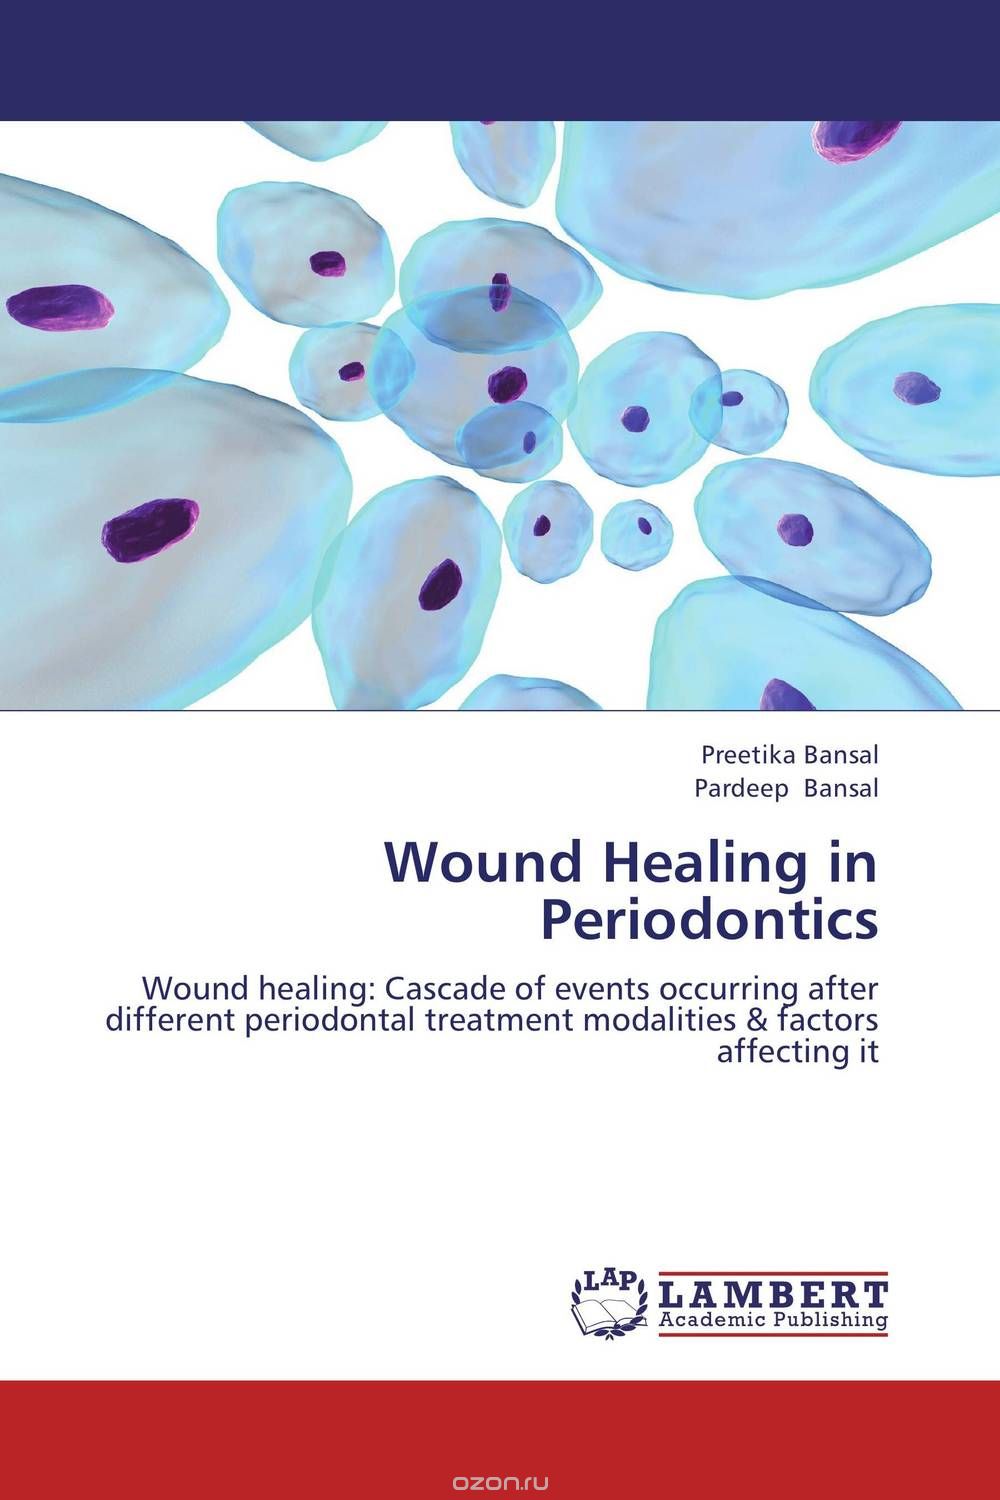 Скачать книгу "Wound Healing in Periodontics"